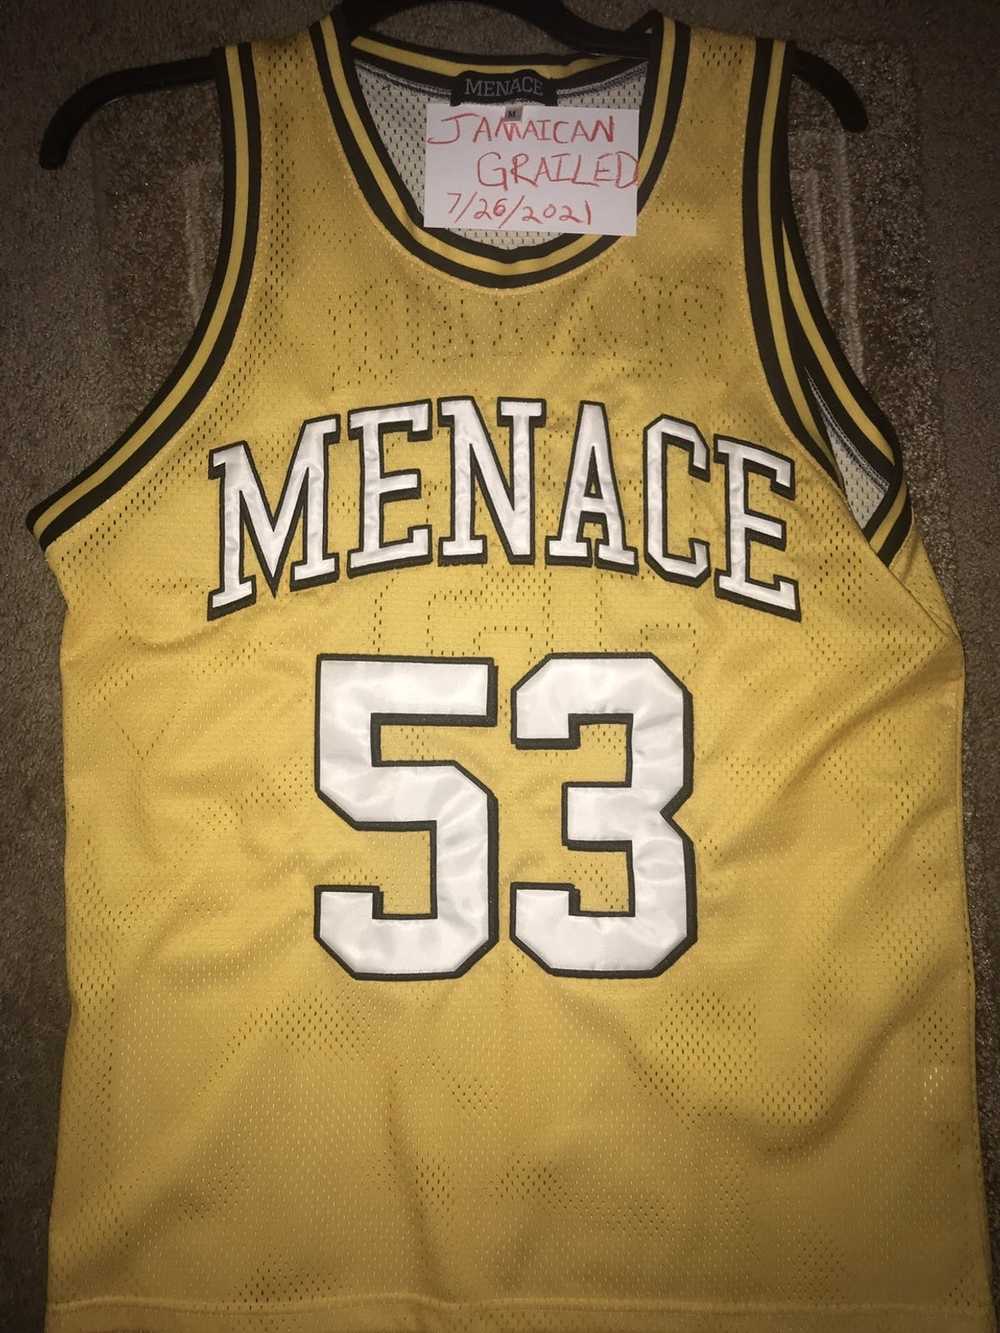 Menace MENACE Playboi jersey - image 1